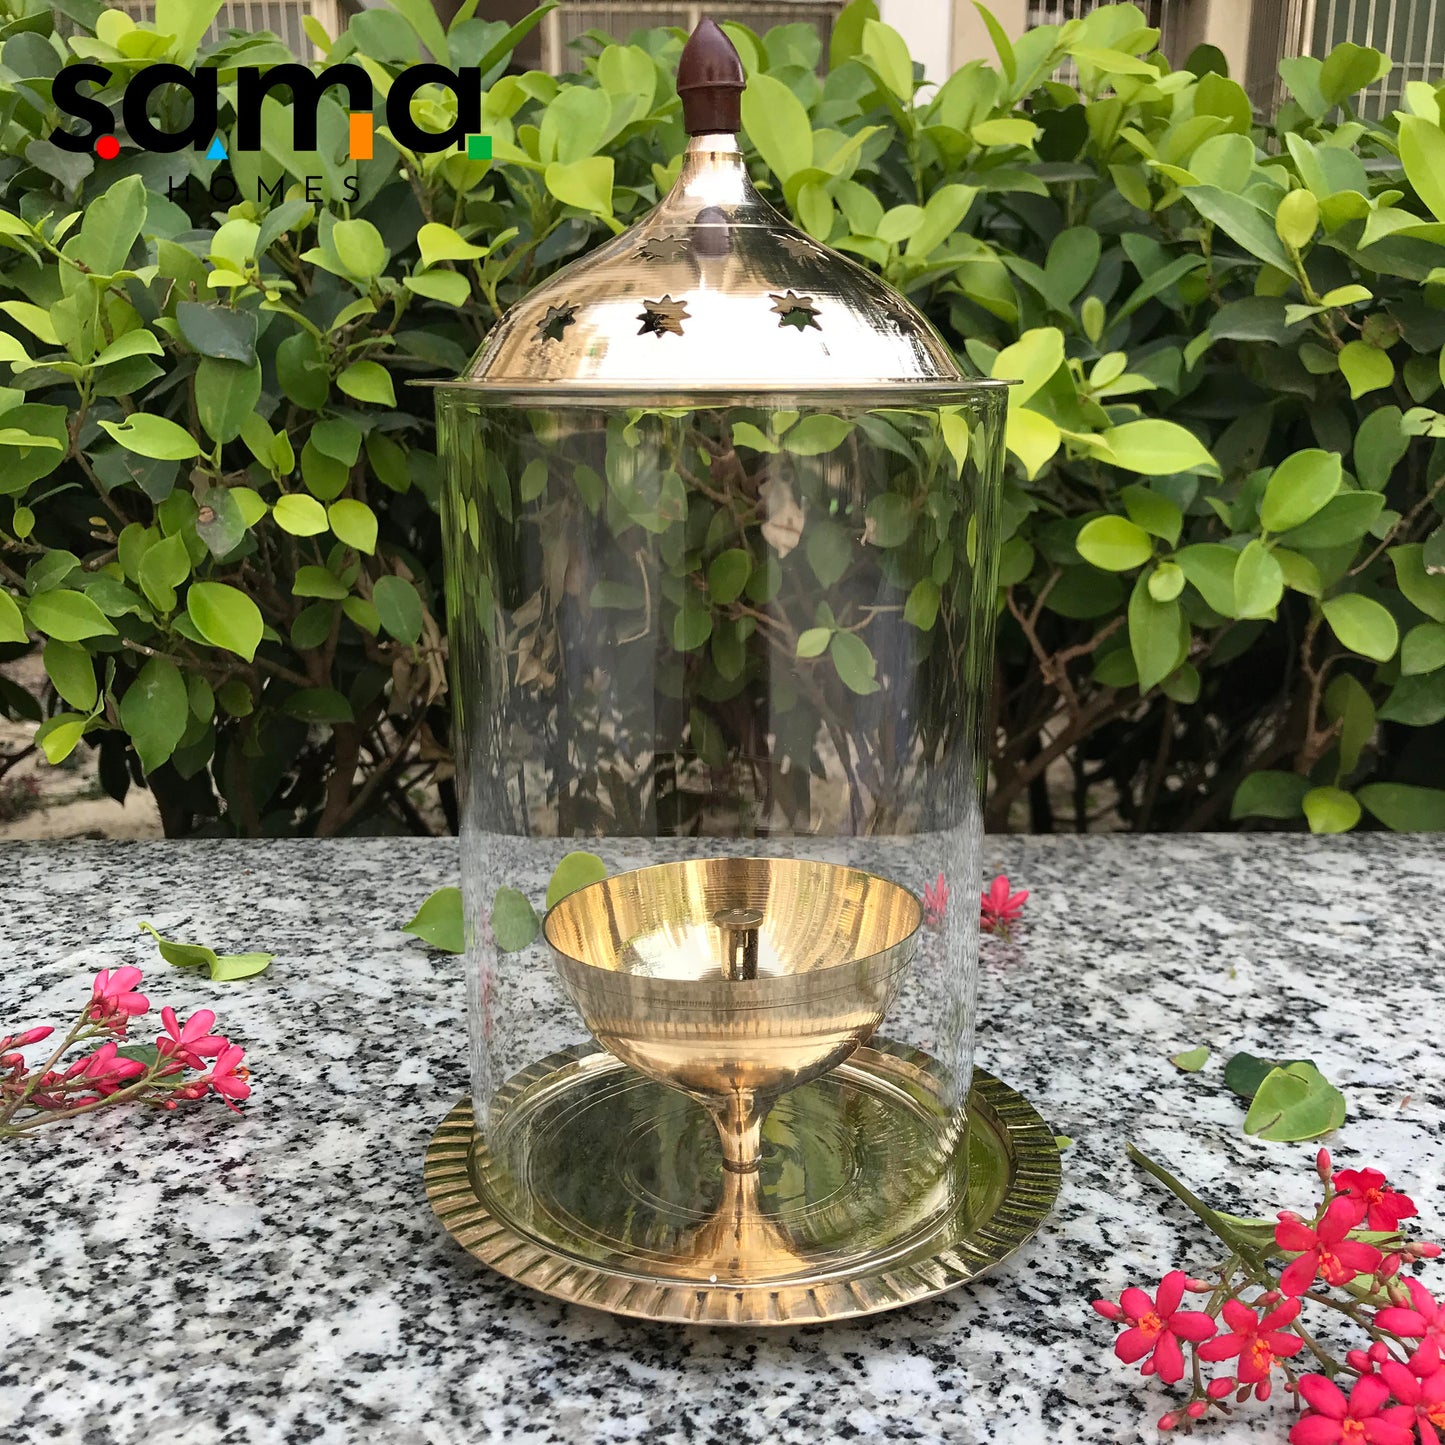 Sama Homes Brass Akhand Jyot Diya with Molded Glass Cover | Oil Pooja Lamp | Diwali Whole night Diya